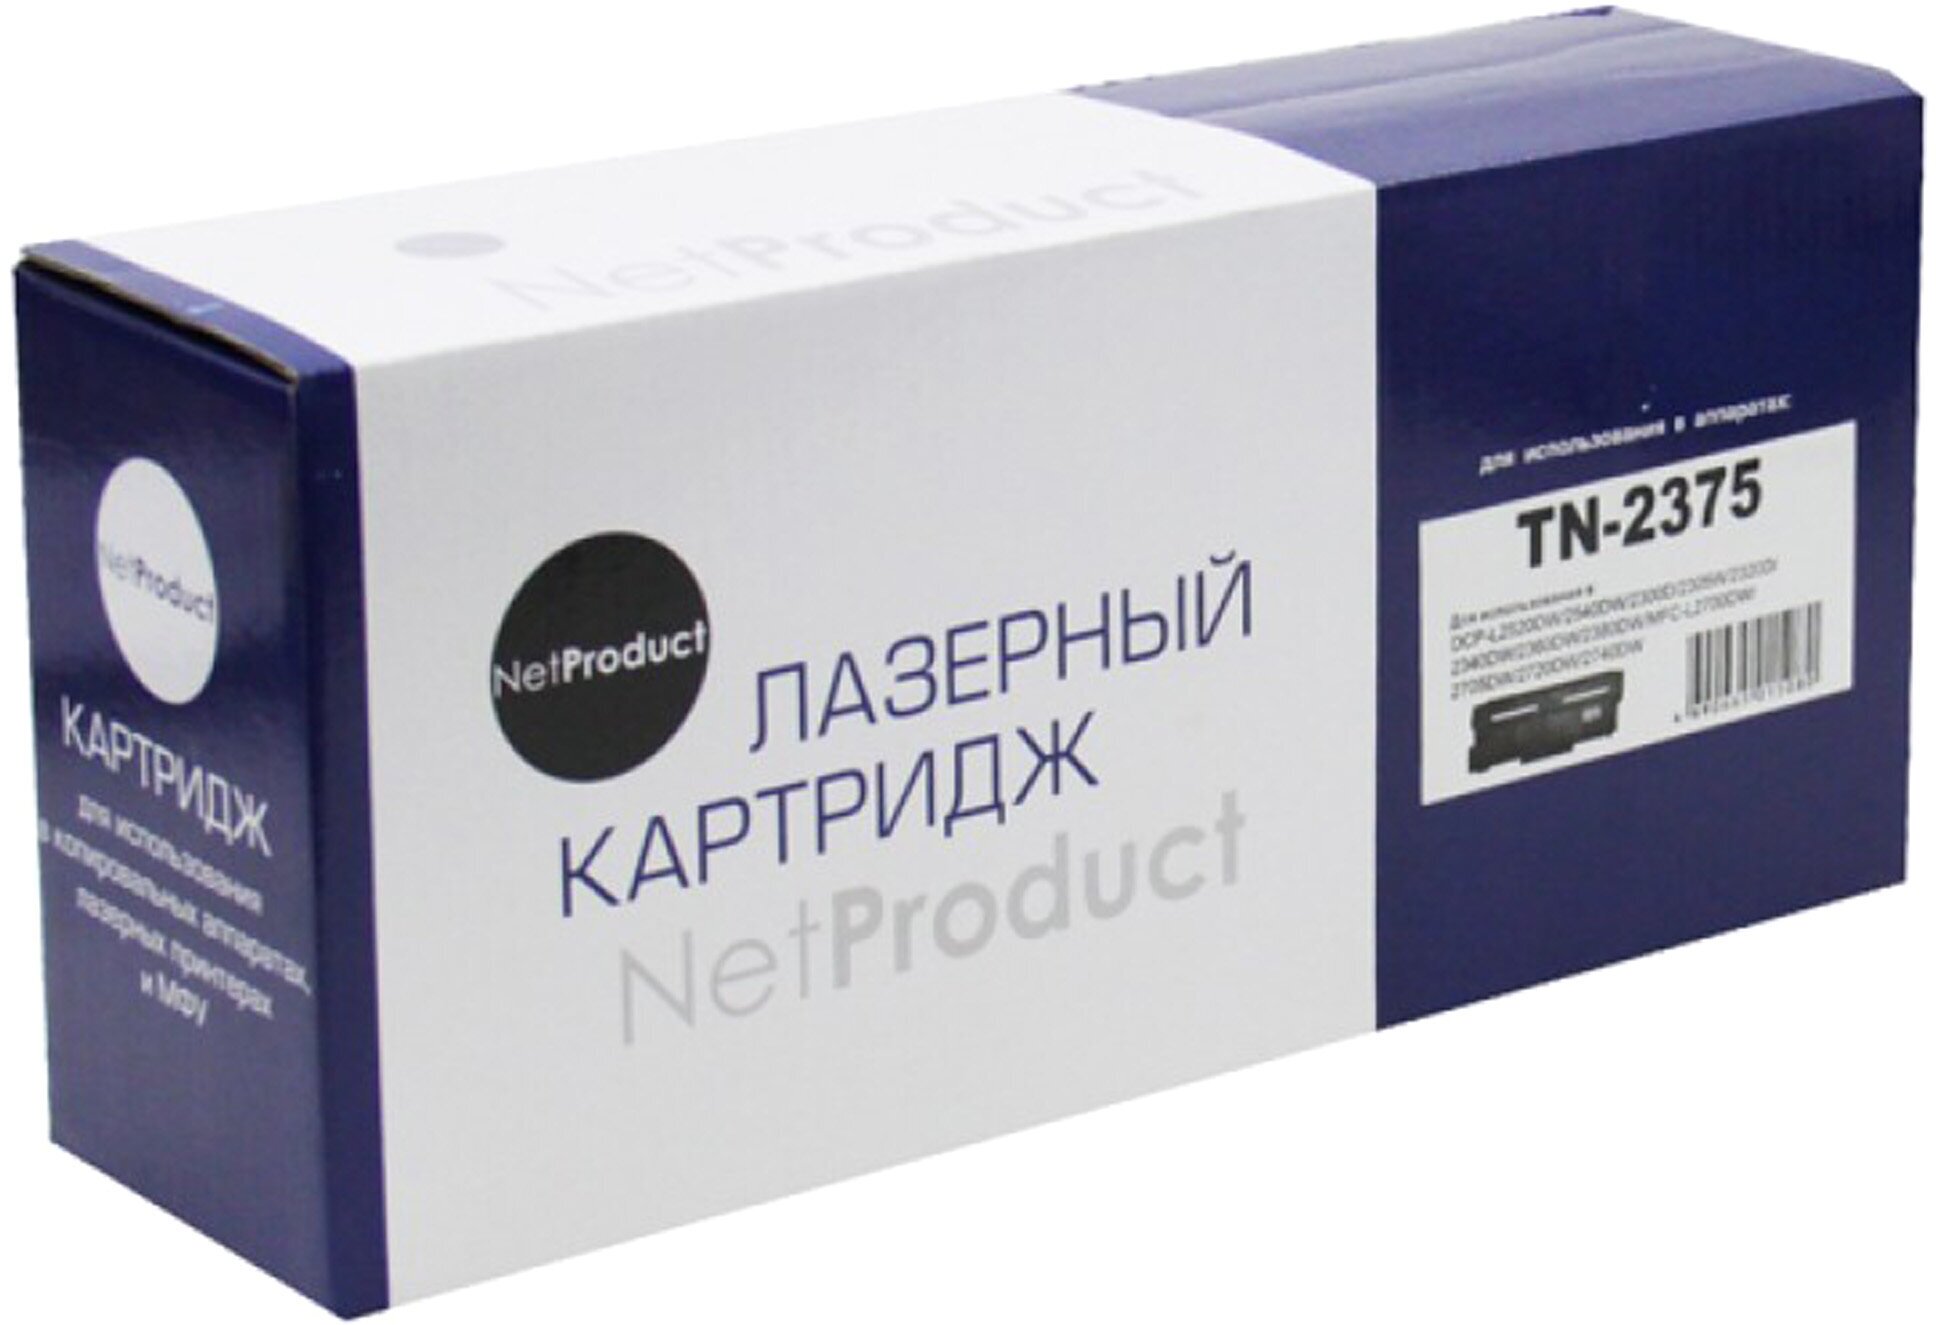 Картридж NetProduct TN-2375